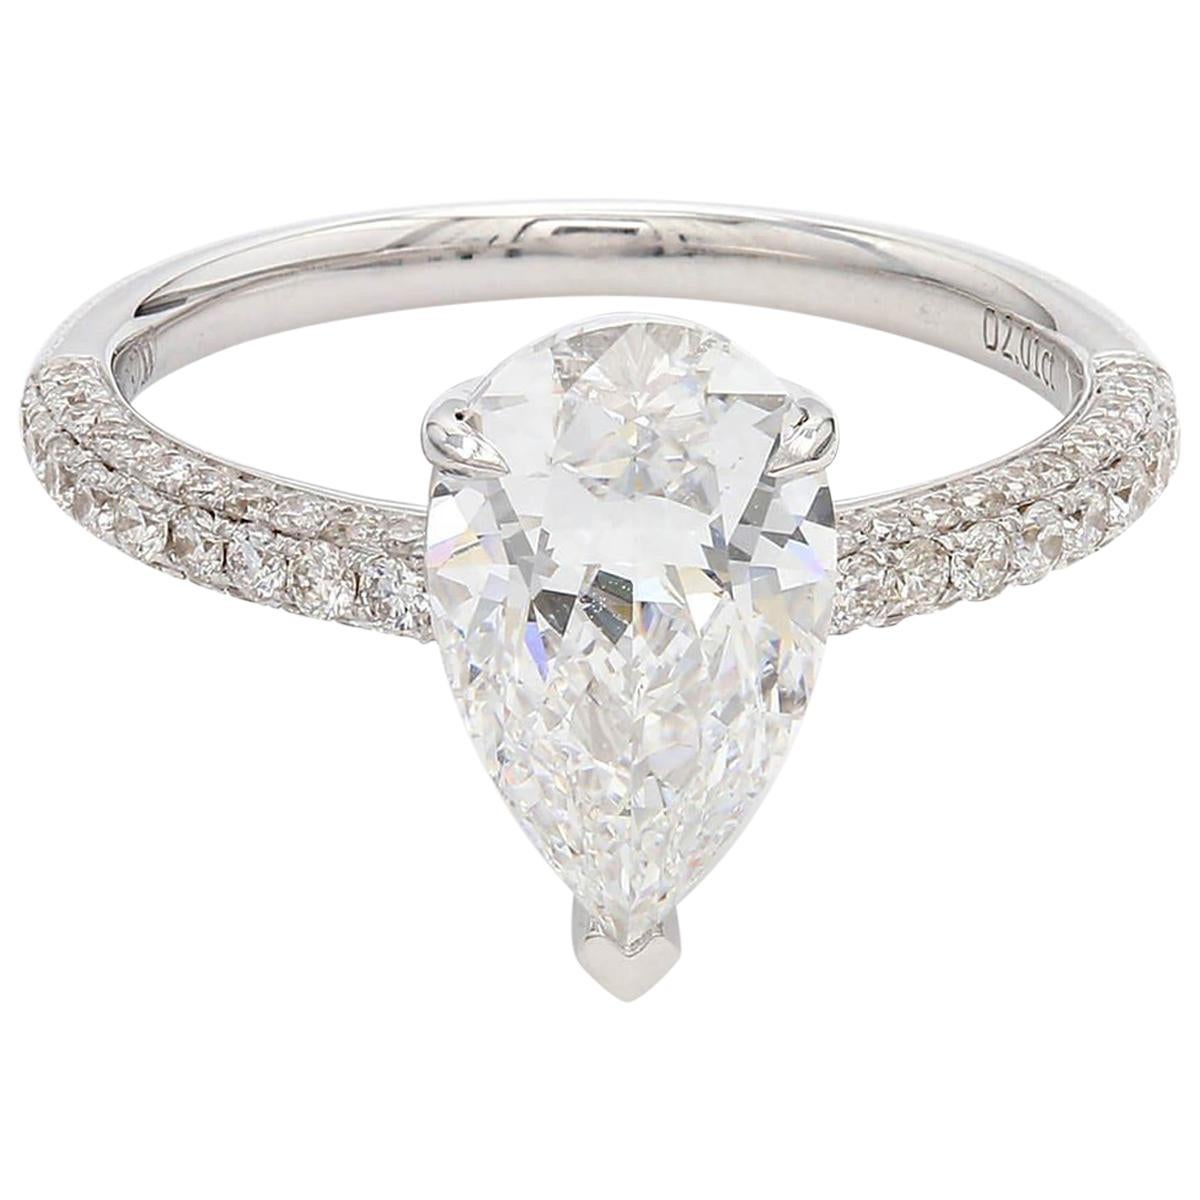 GIA Certified White Gold Pear Cut Diamond Ring, 2.45 Carat